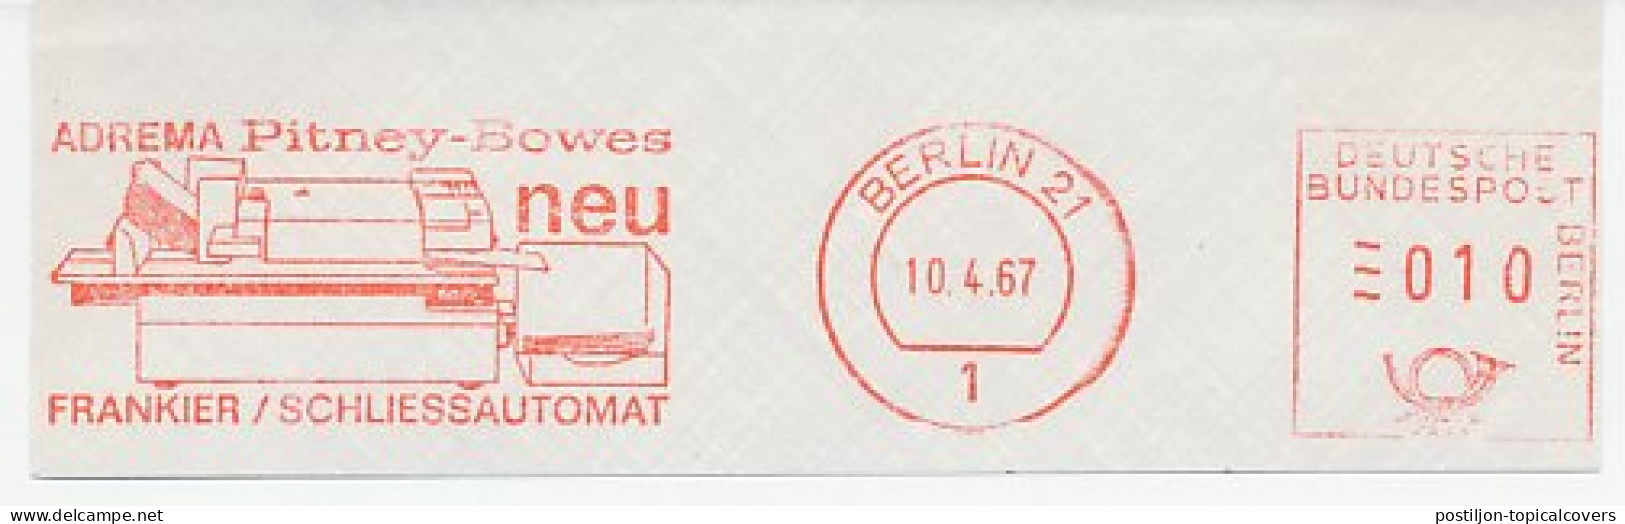 Meter Cut Germany 1967 Pitney Bowes- Adrema - Franking Machine - Vignette [ATM]